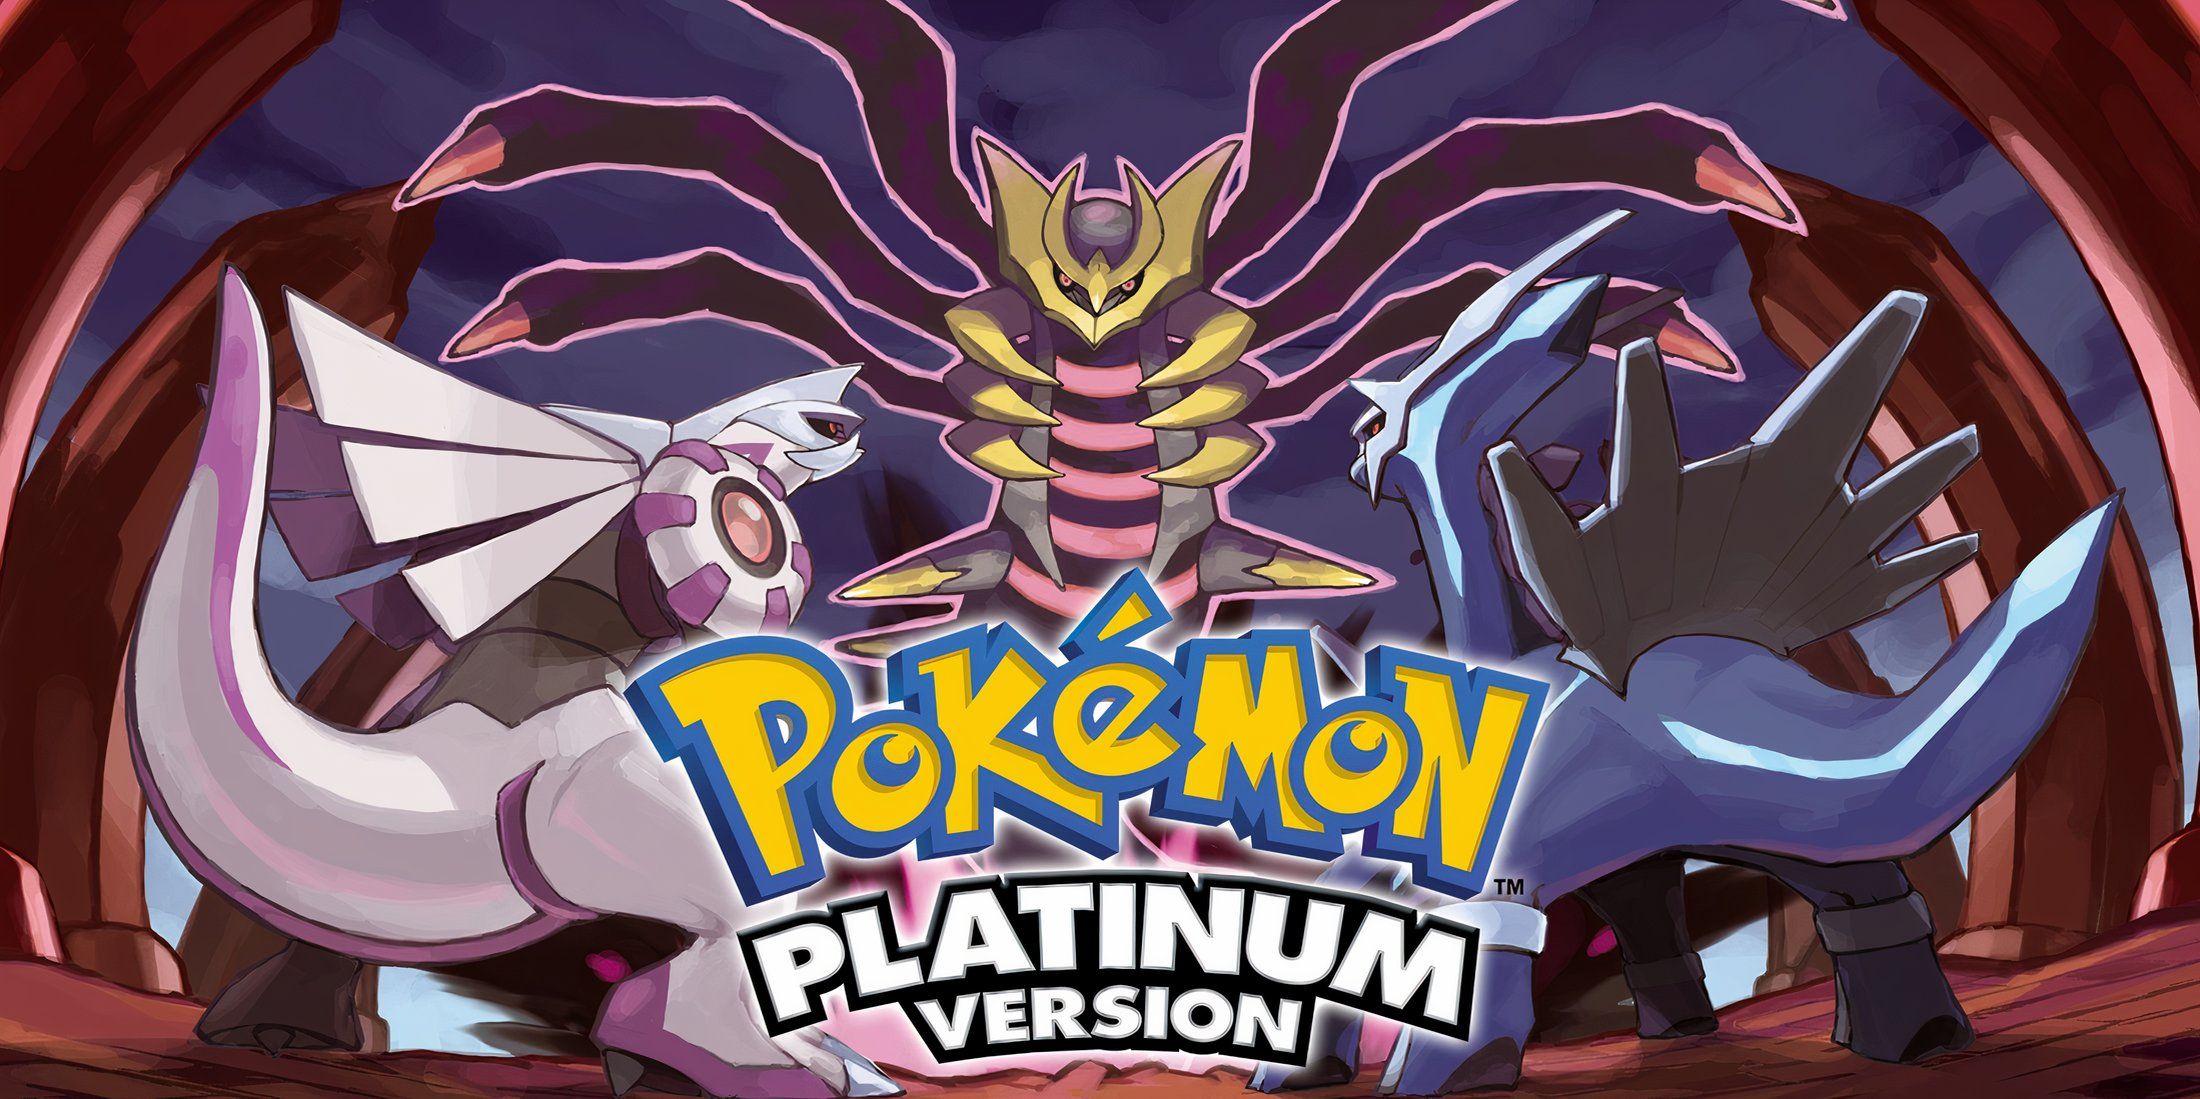 pokemon platinum version cover art.